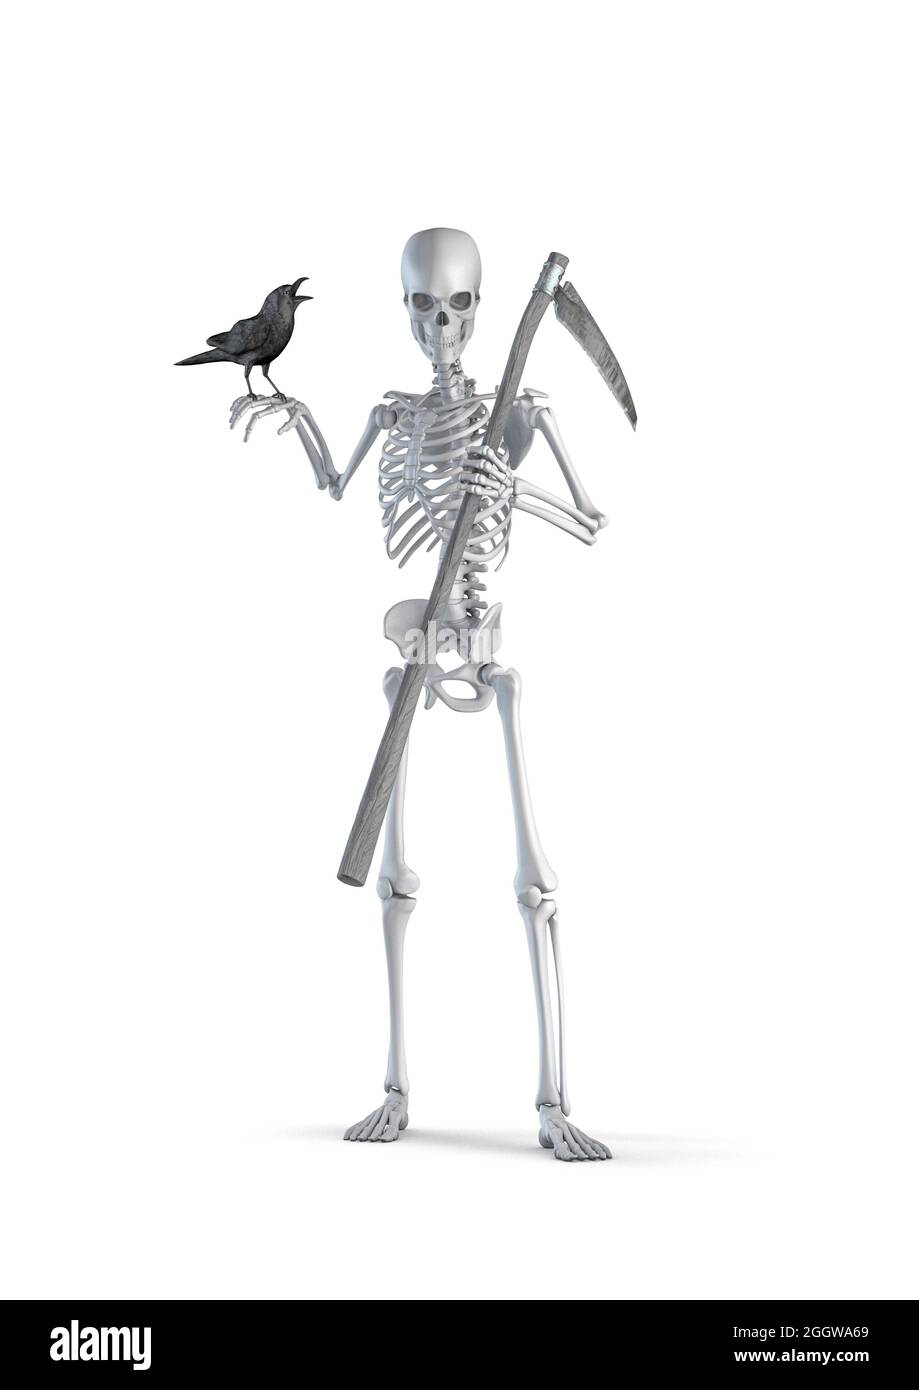 https://c8.alamy.com/comp/2GGWA69/grim-reaper-skeleton-3d-illustration-of-male-human-skeleton-death-figure-holding-scythe-and-black-crow-isolated-on-white-studio-background-2GGWA69.jpg